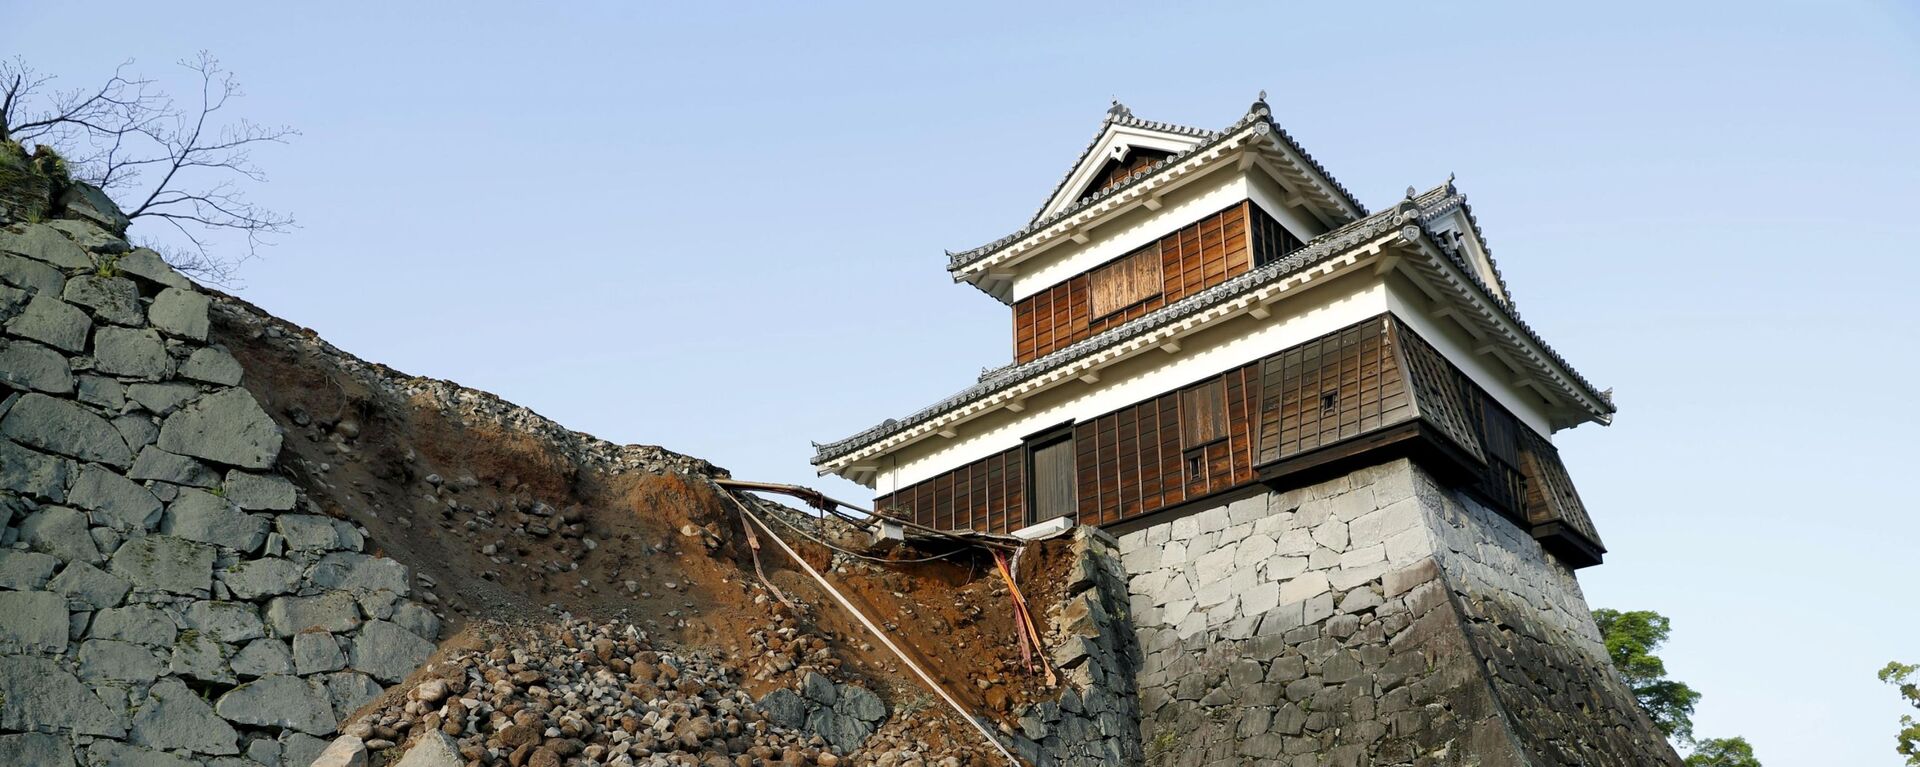 Пострадавшая от землетрясение стена замка в городе Кумамото в Японии - Sputnik Latvija, 1920, 22.11.2016